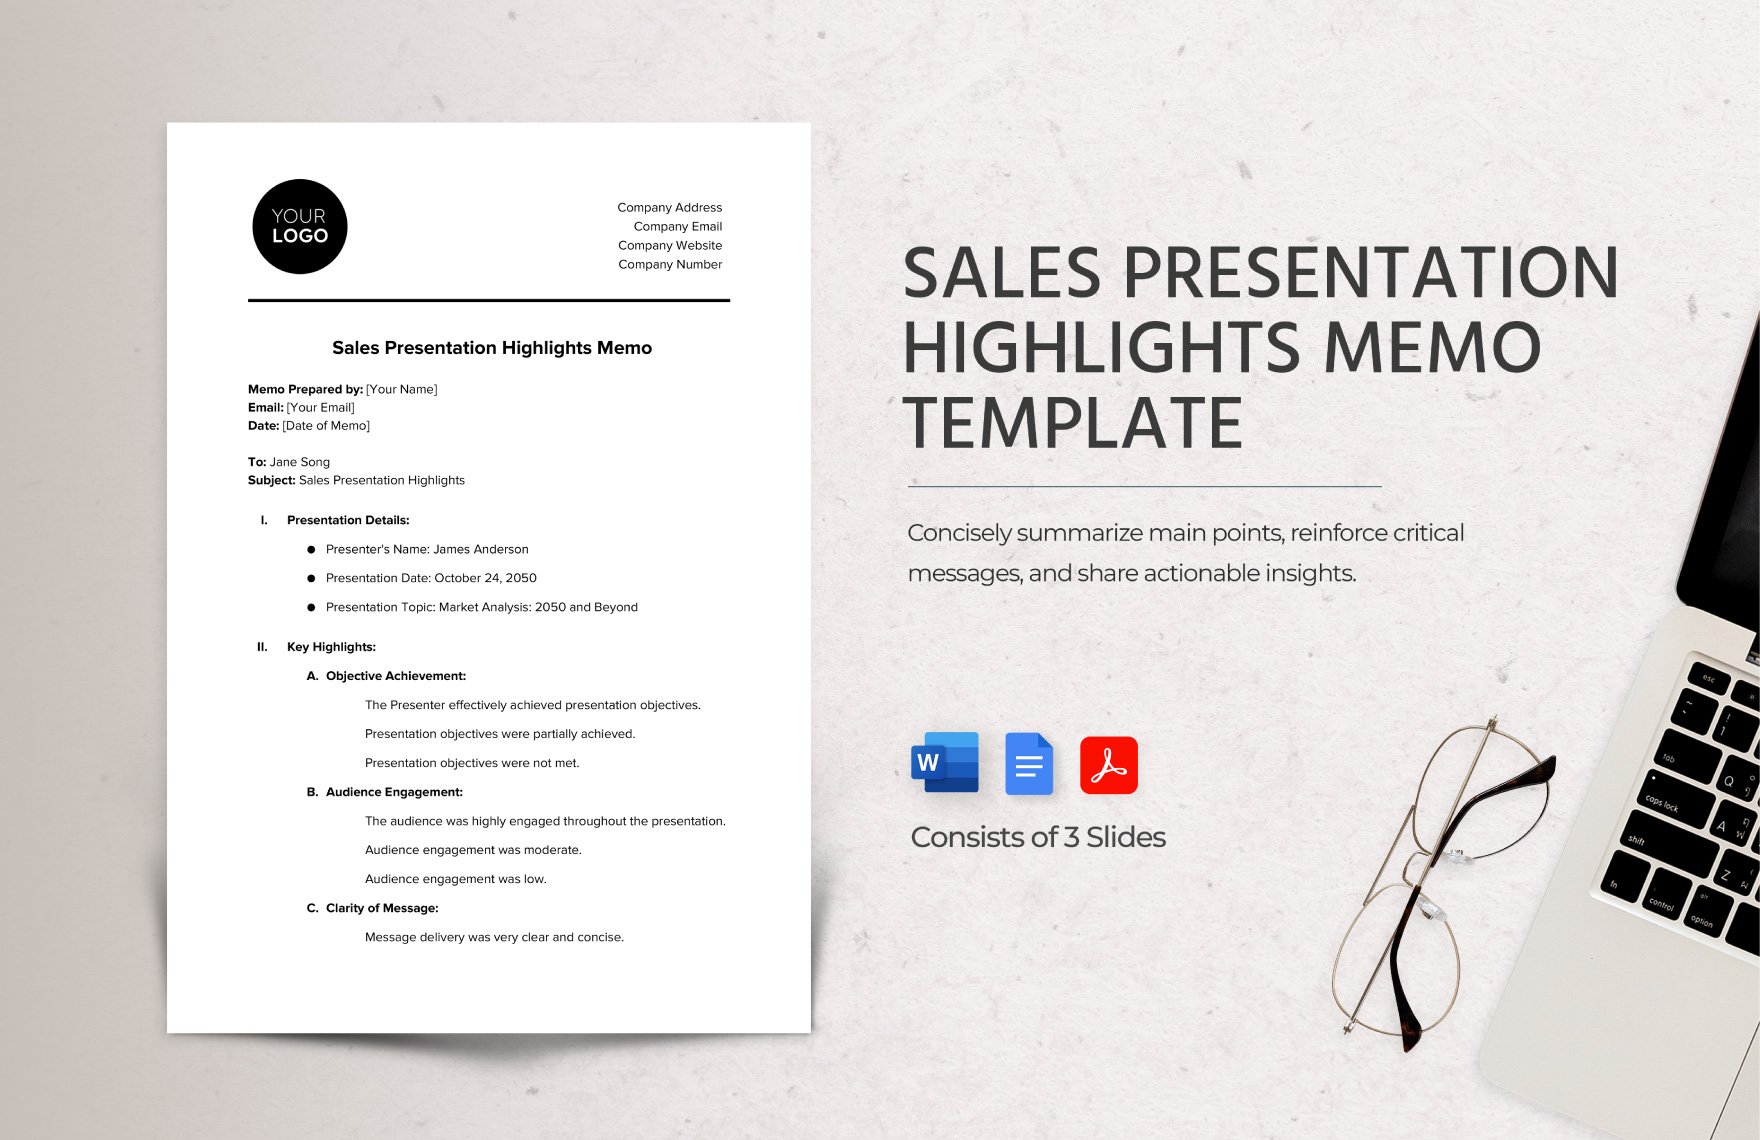 Sales Presentation Highlights Memo Template